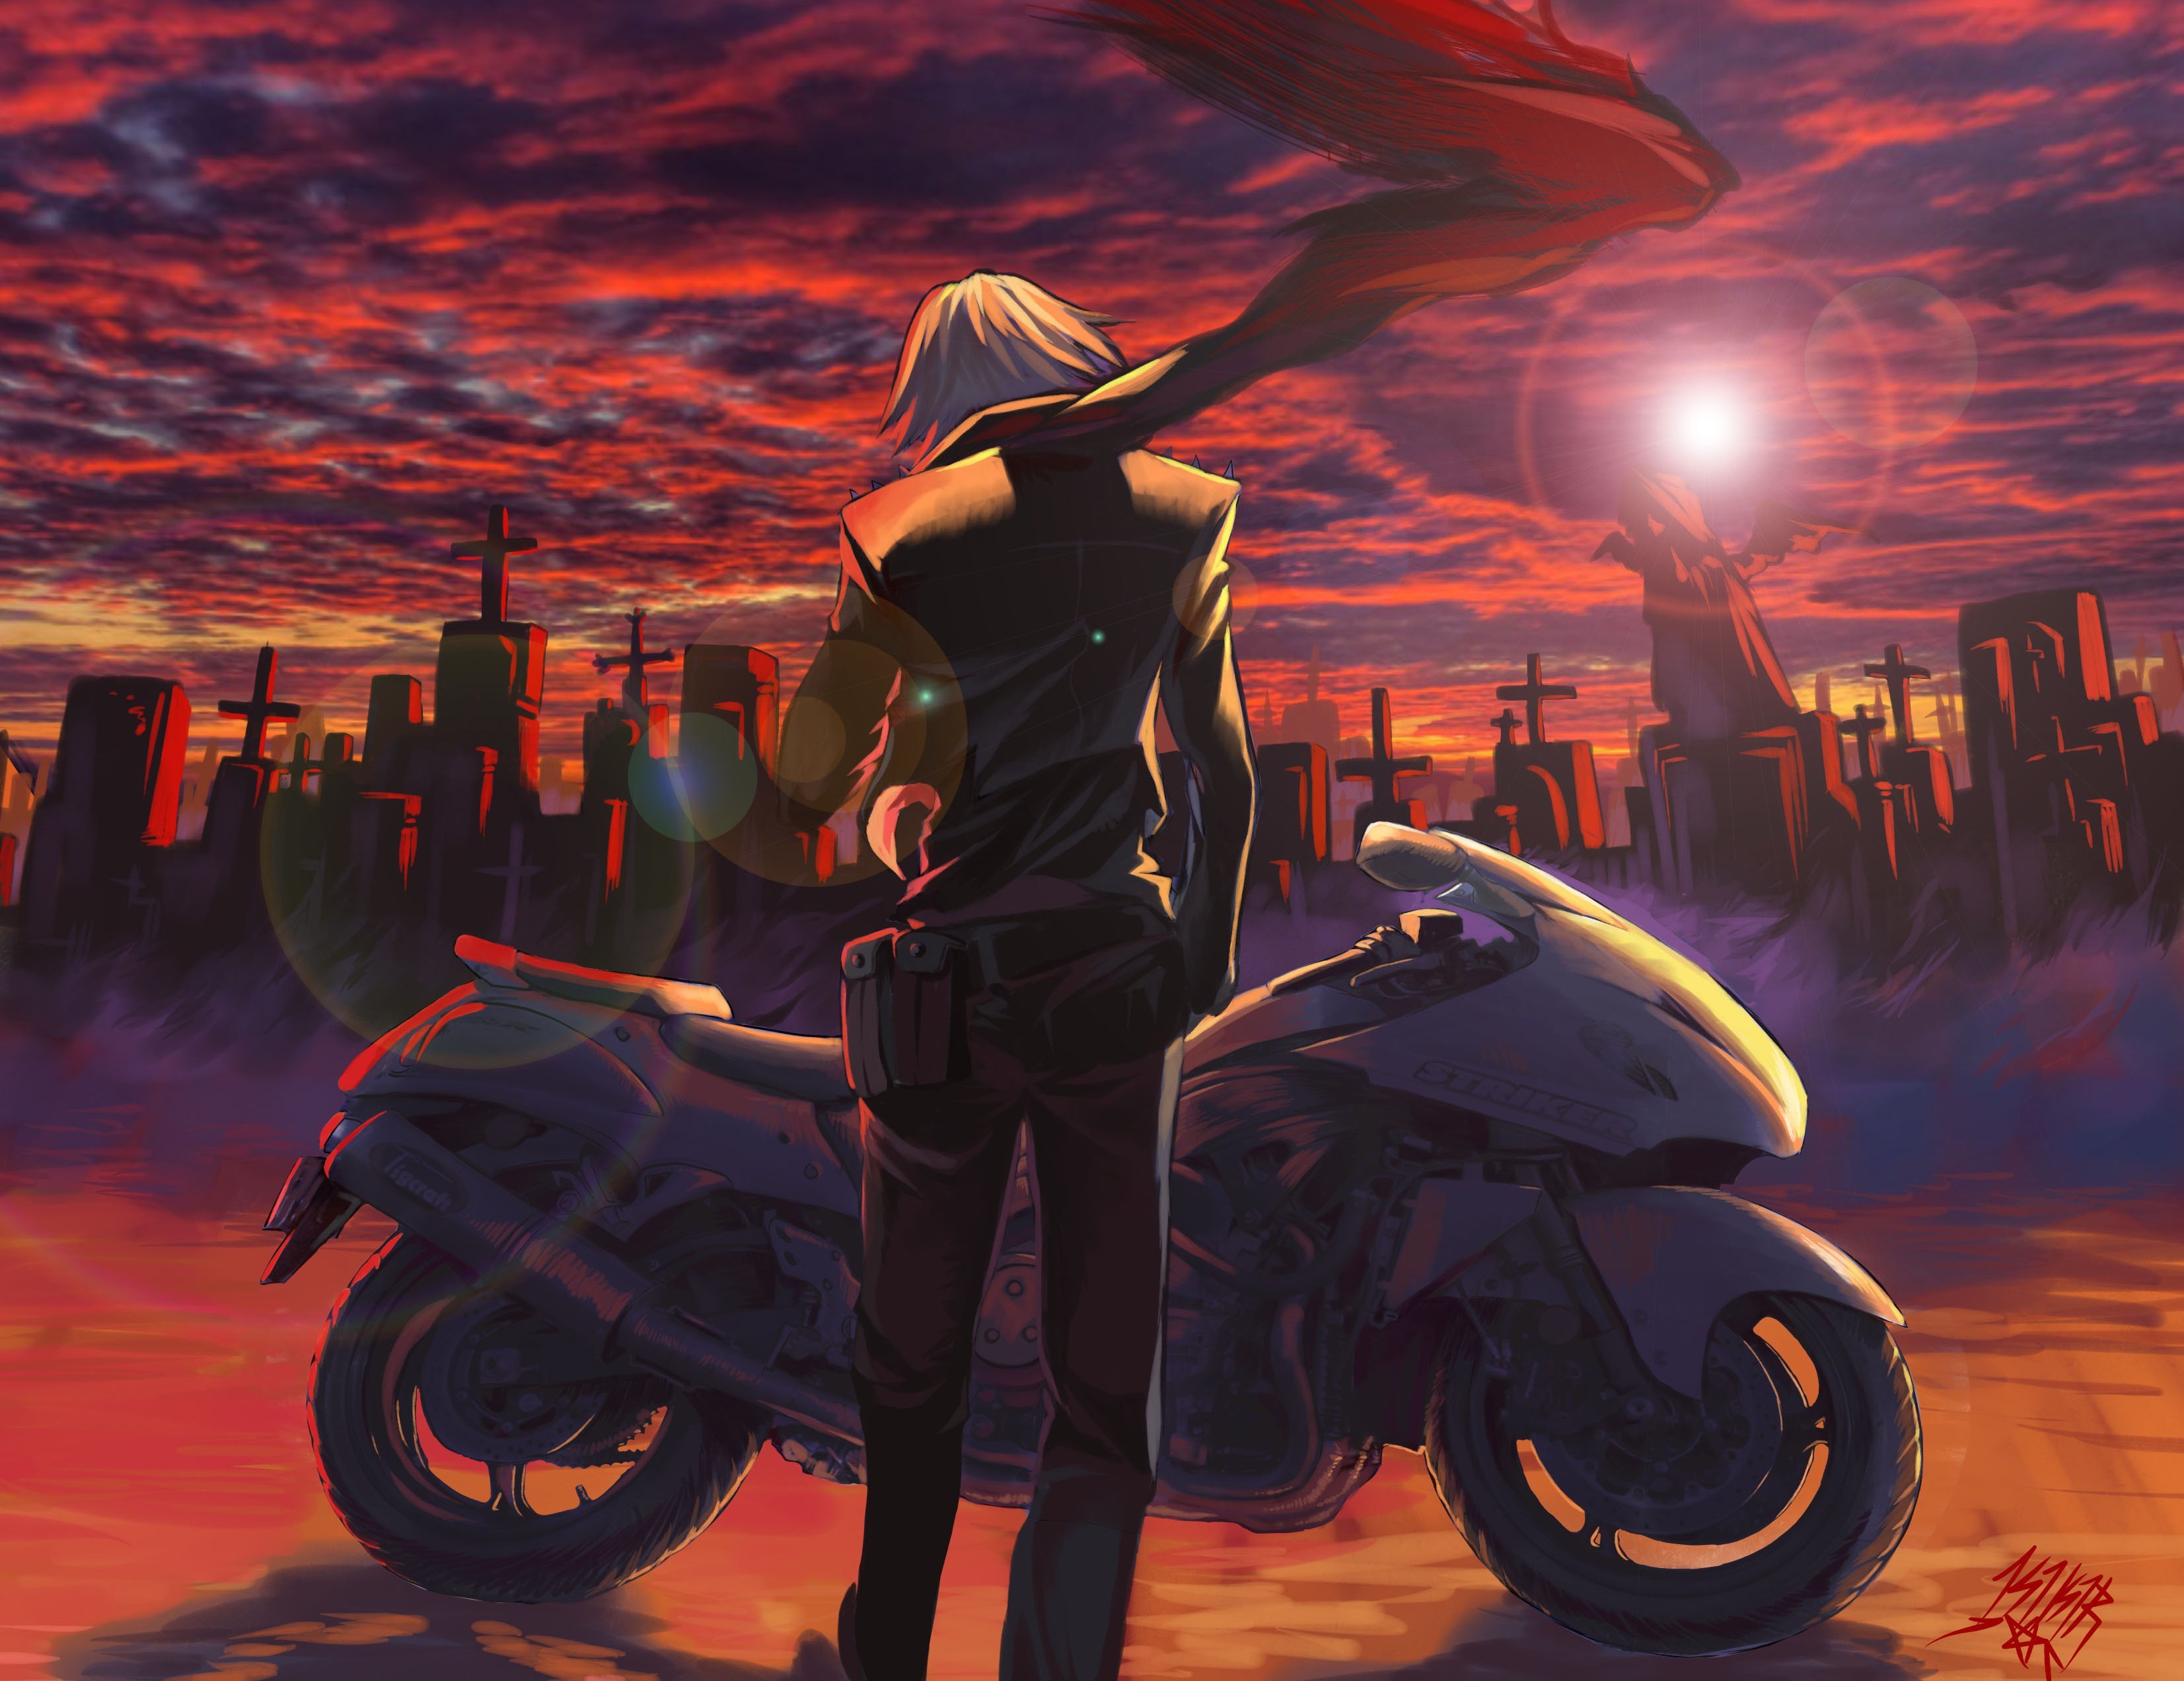 Wallpaper, illustration, anime, motorcycle, vehicle, ART, bike, guy, screenshot, stunt performer 3306x2545